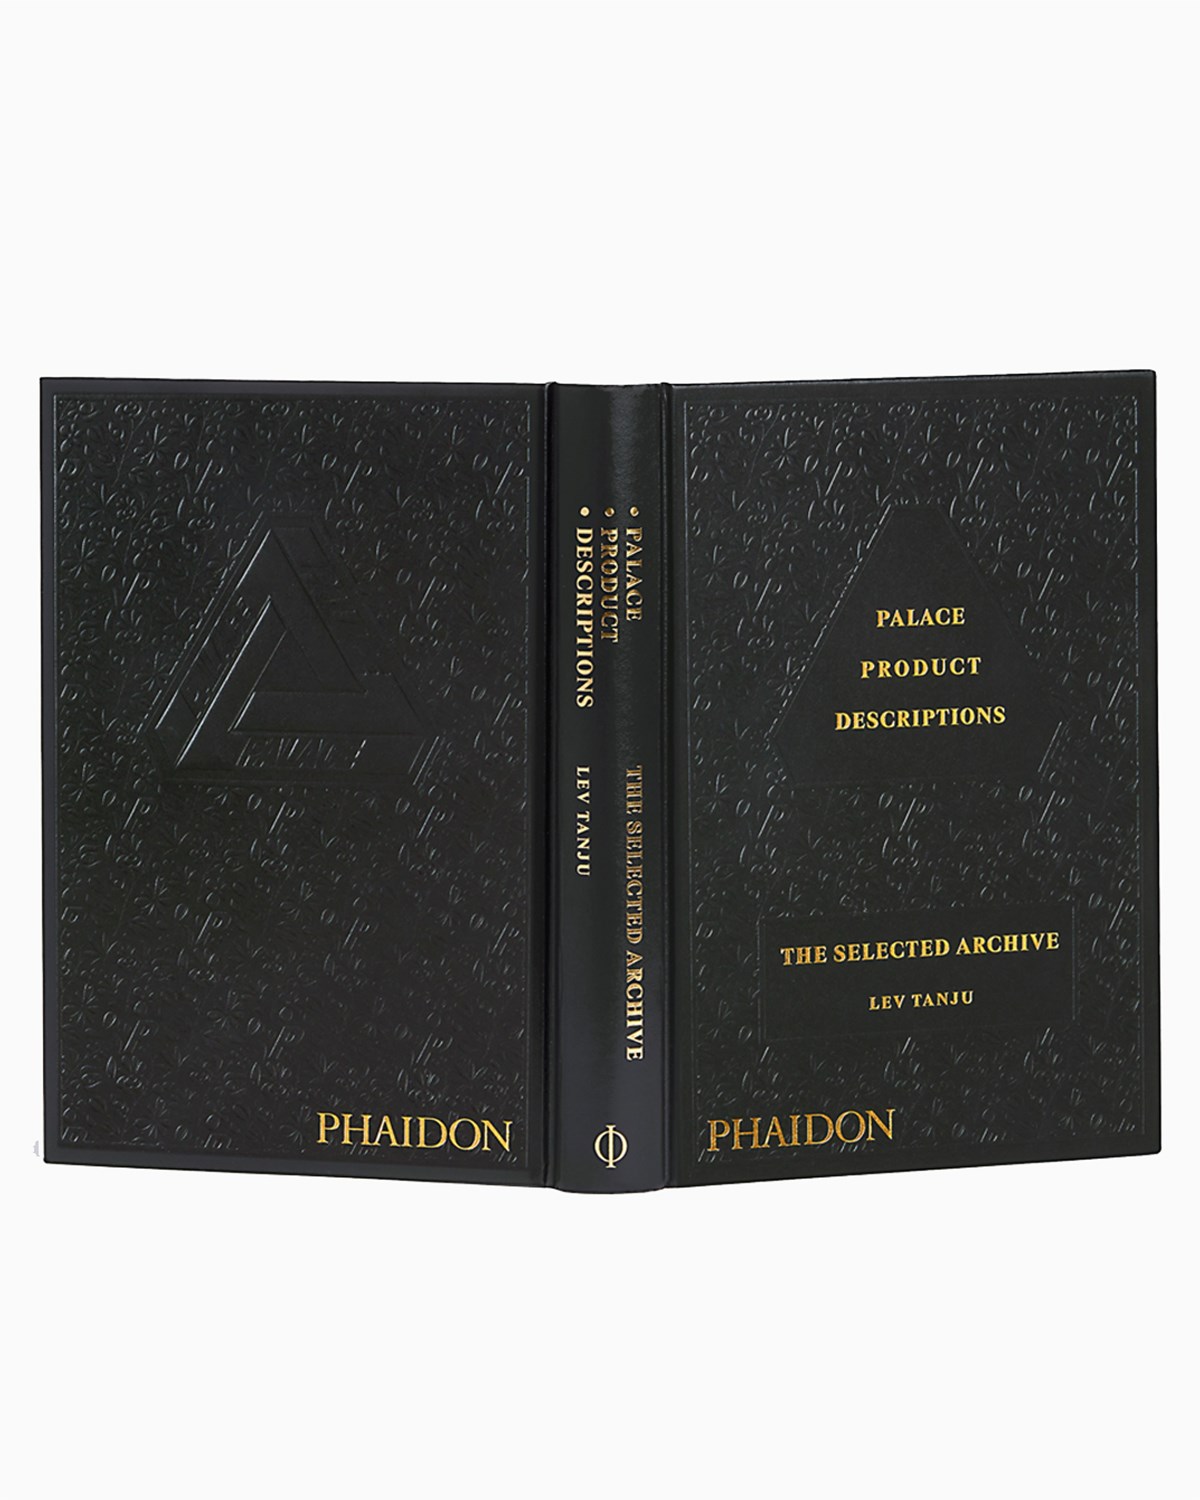 Palace Product Descriptions $54 Phaidon Bookstore Books Black